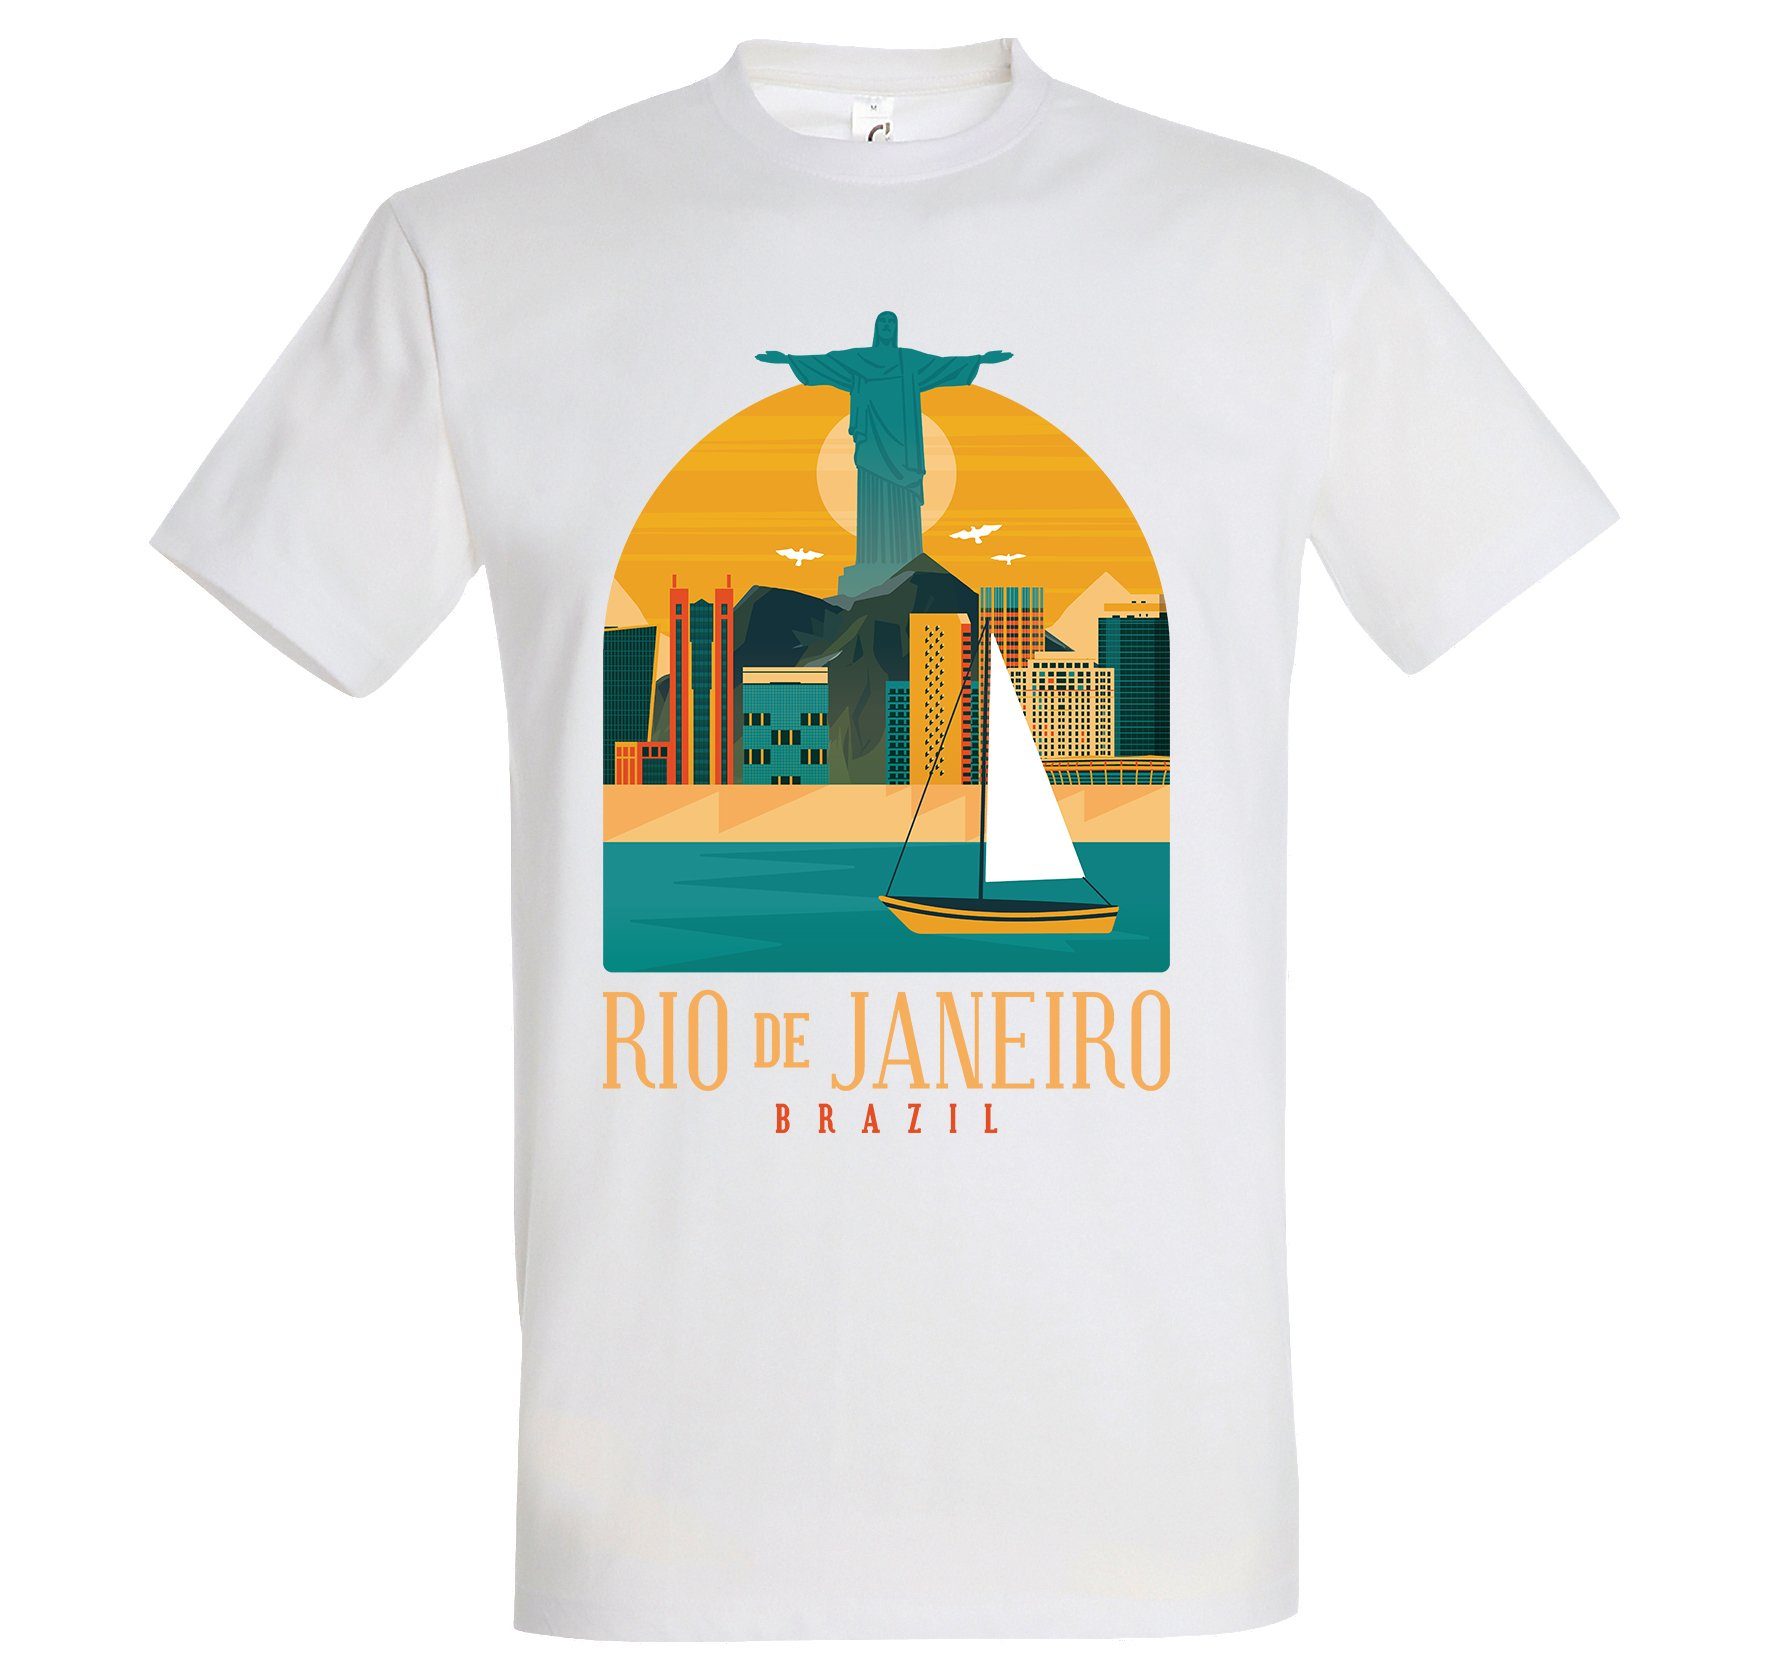 Rio Weiß trendigem Frontprint mit Youth T-Shirt Herren Shirt De Designz Janeiro